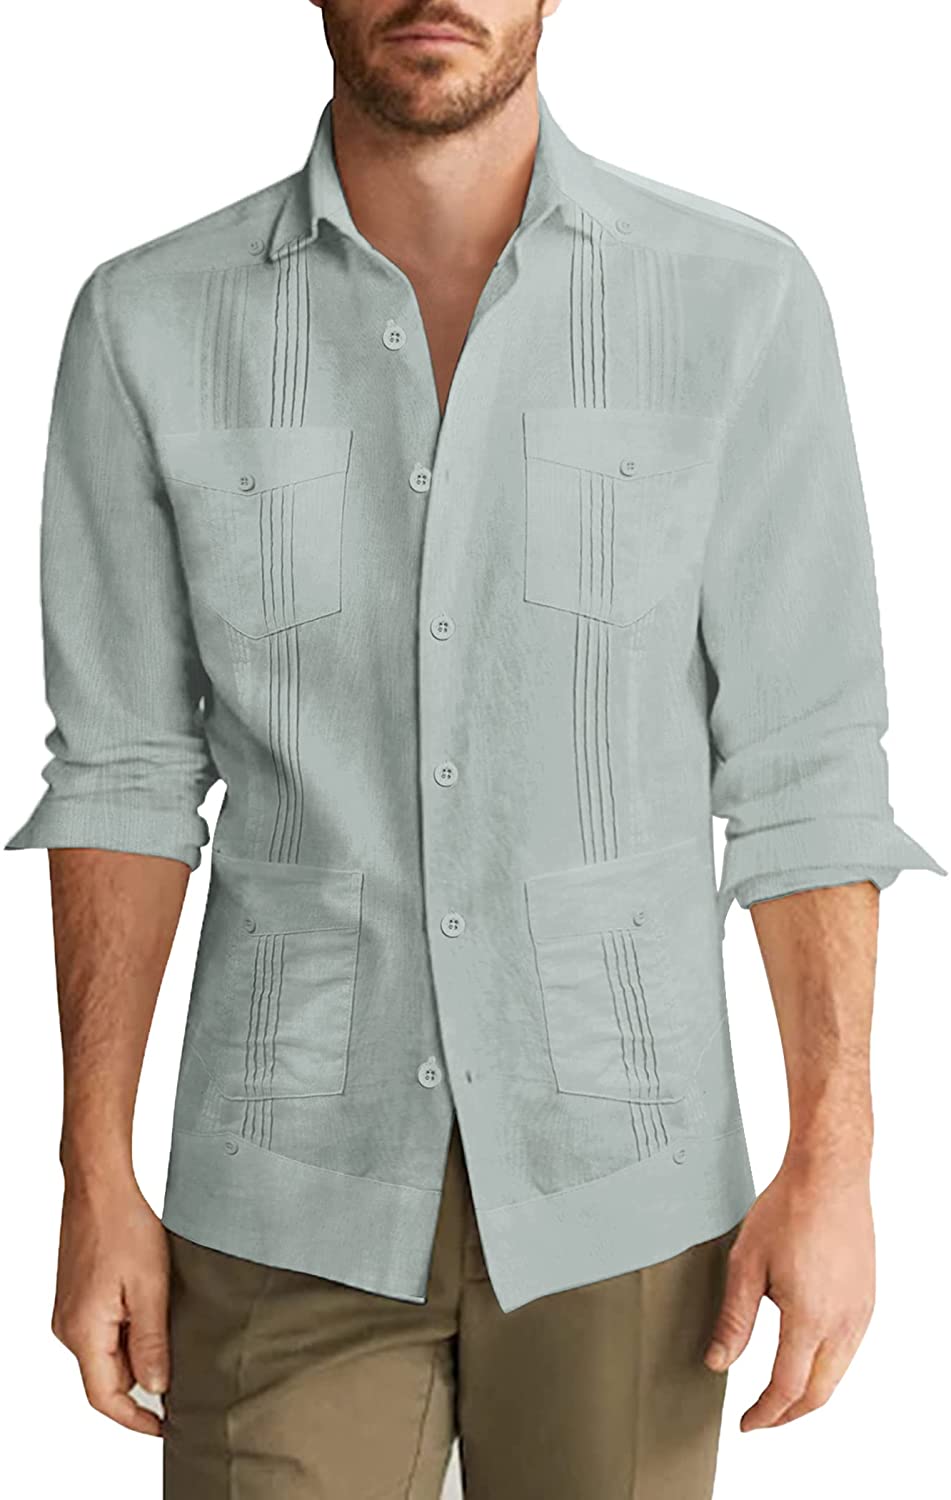 COOFANDY Men's Long Sleeve Cuban Guayabera Shirt Casual Button Down Cotton Linen Beach Wedding Shirt 